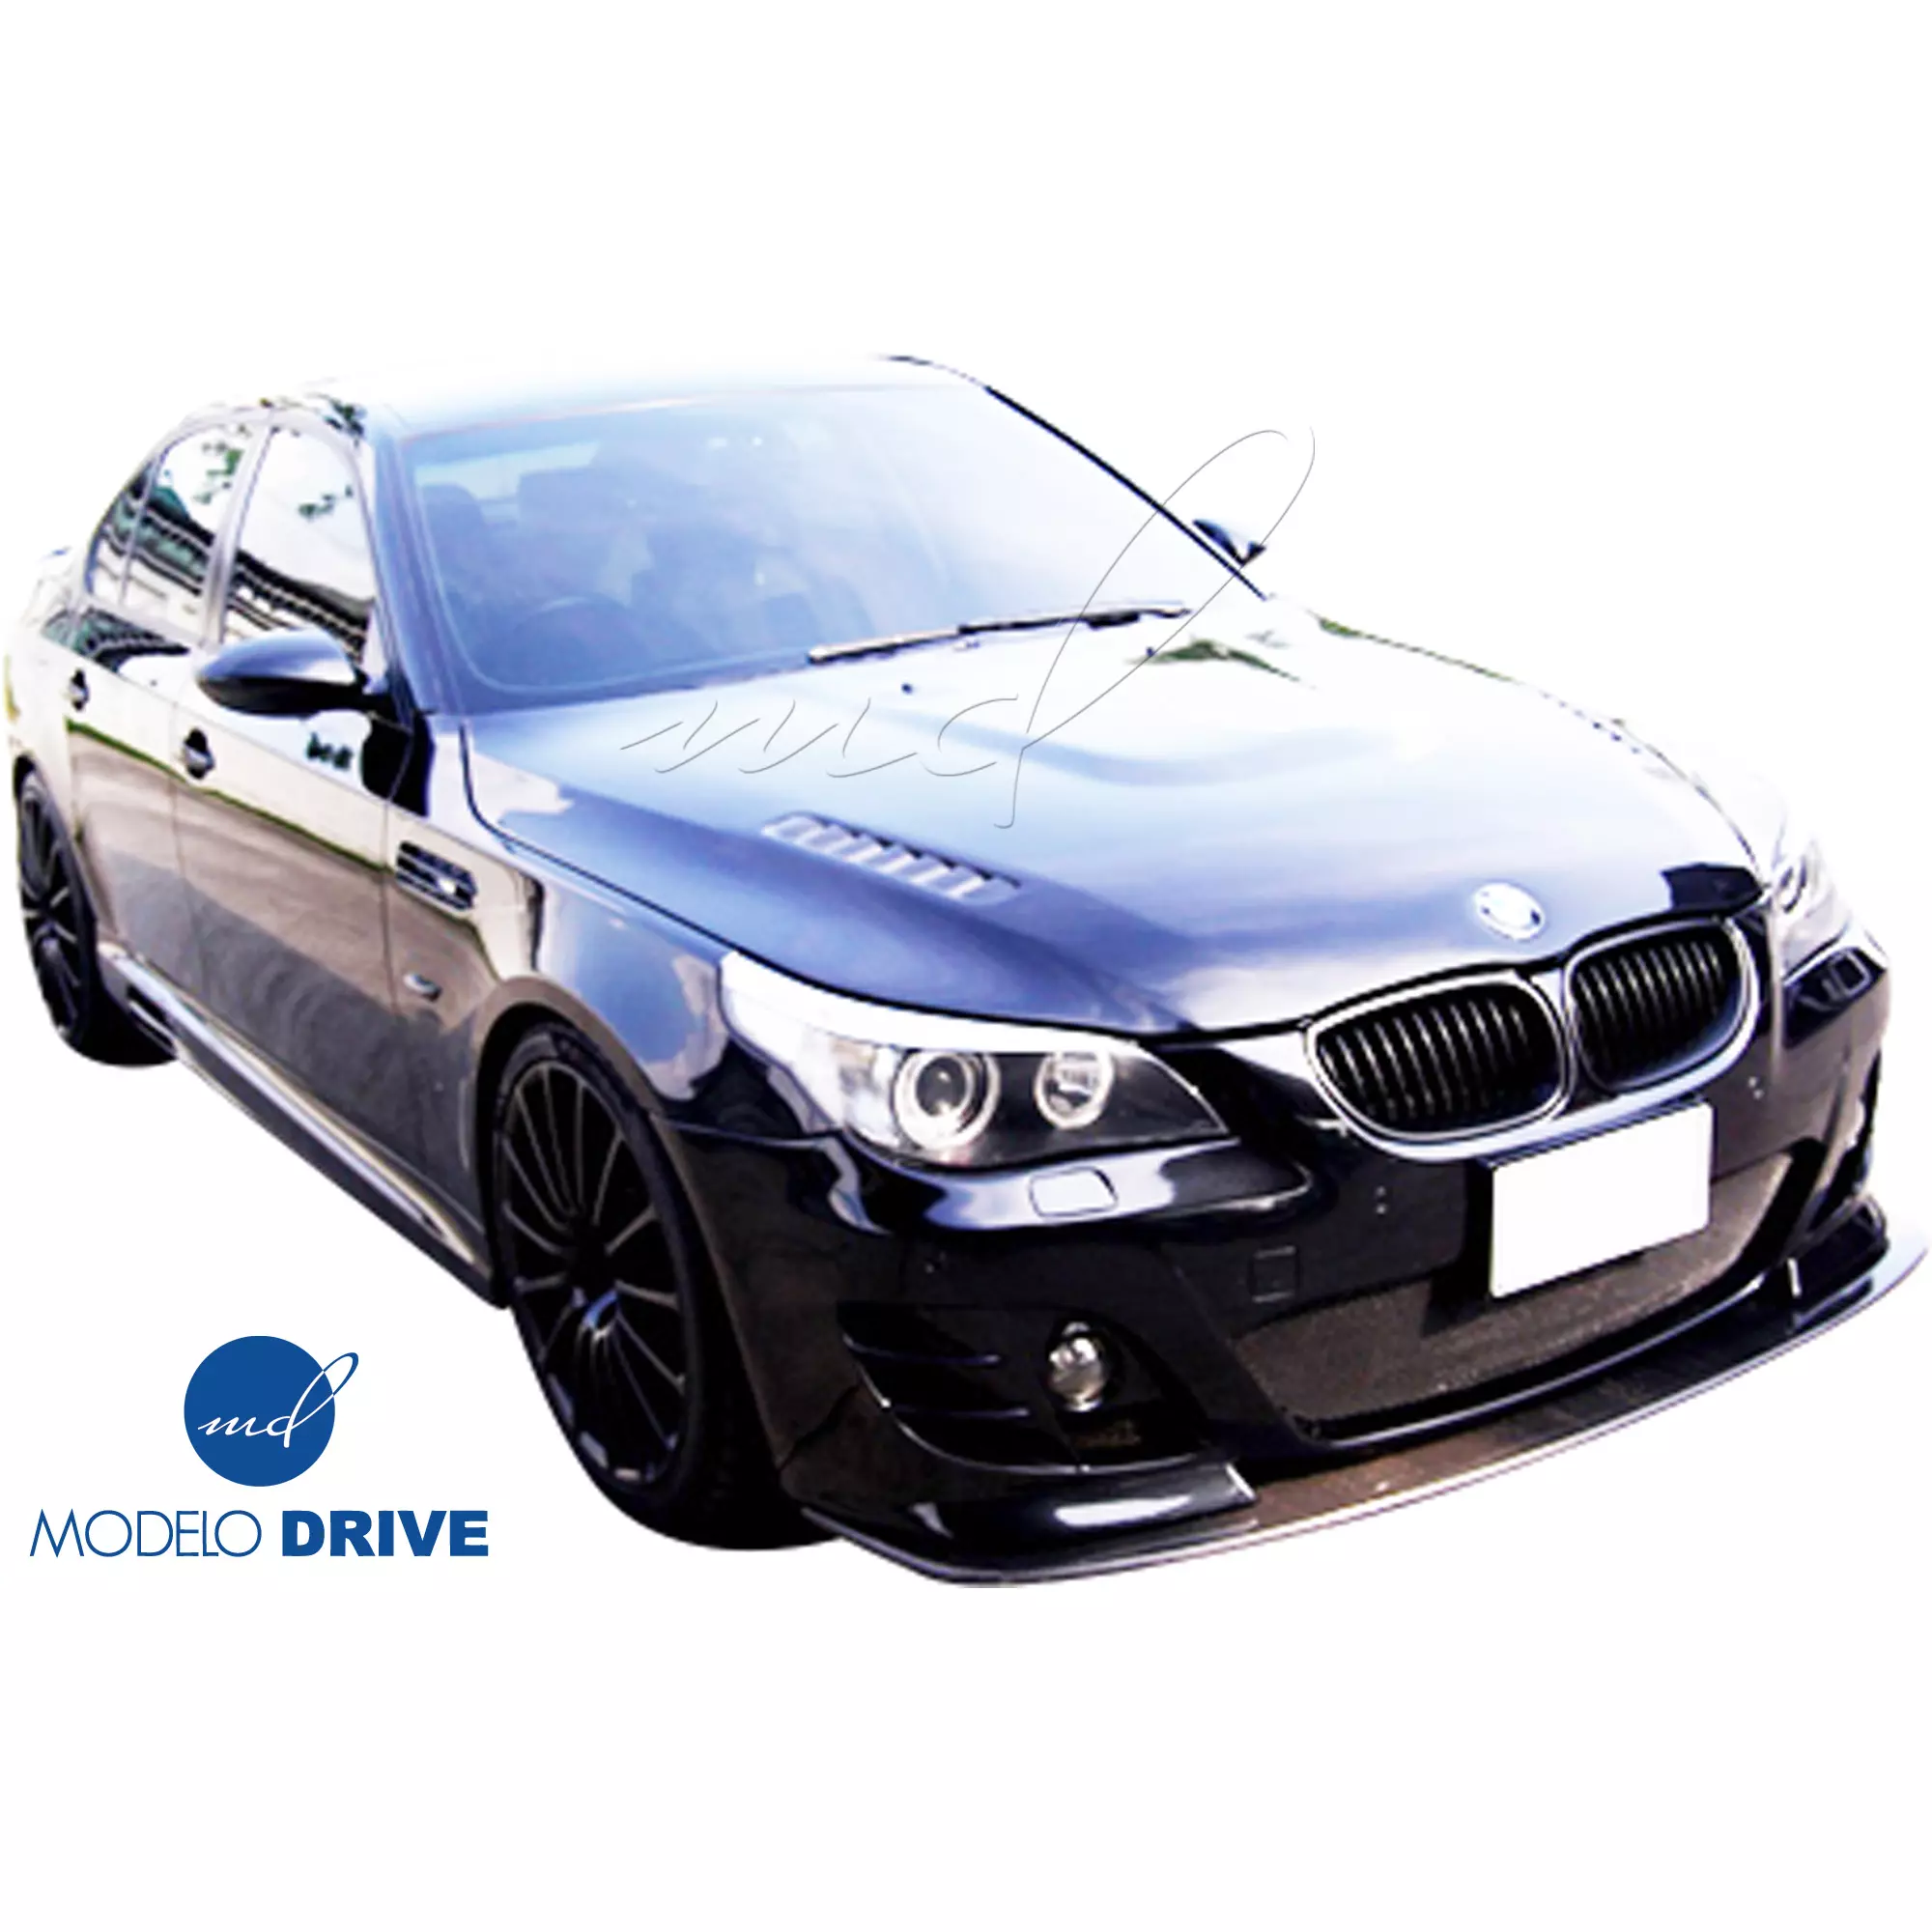 ModeloDrive FRP KERS Body Kit 4pc > BMW 3-Series E60 2004-2010 > 4dr - Image 10